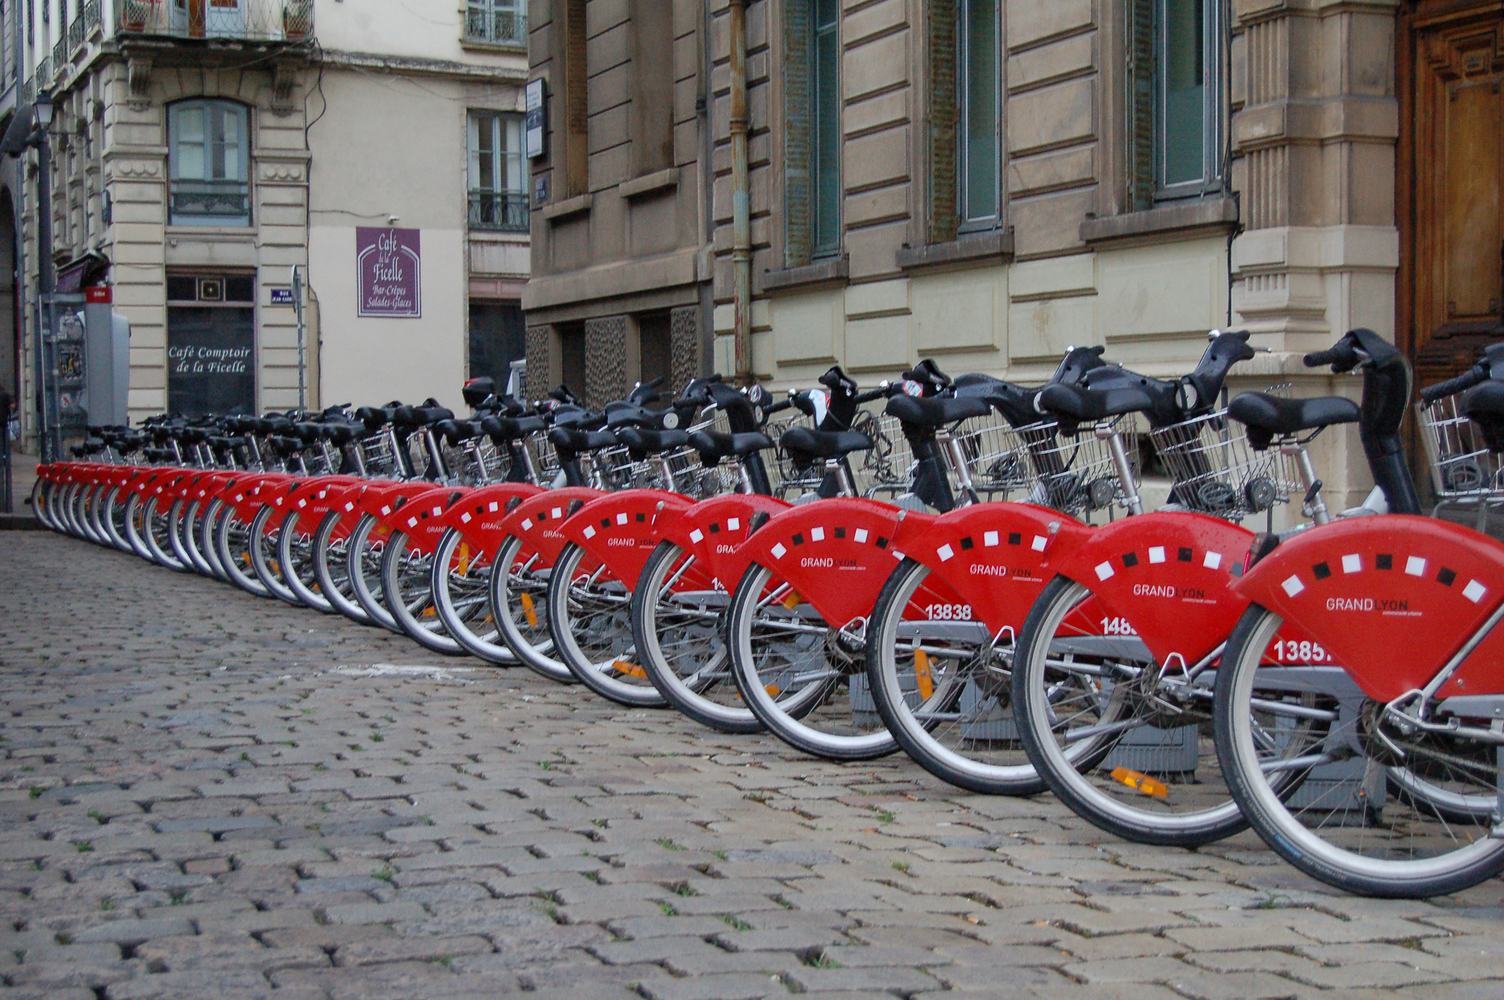 Rental City Bikes in a Row